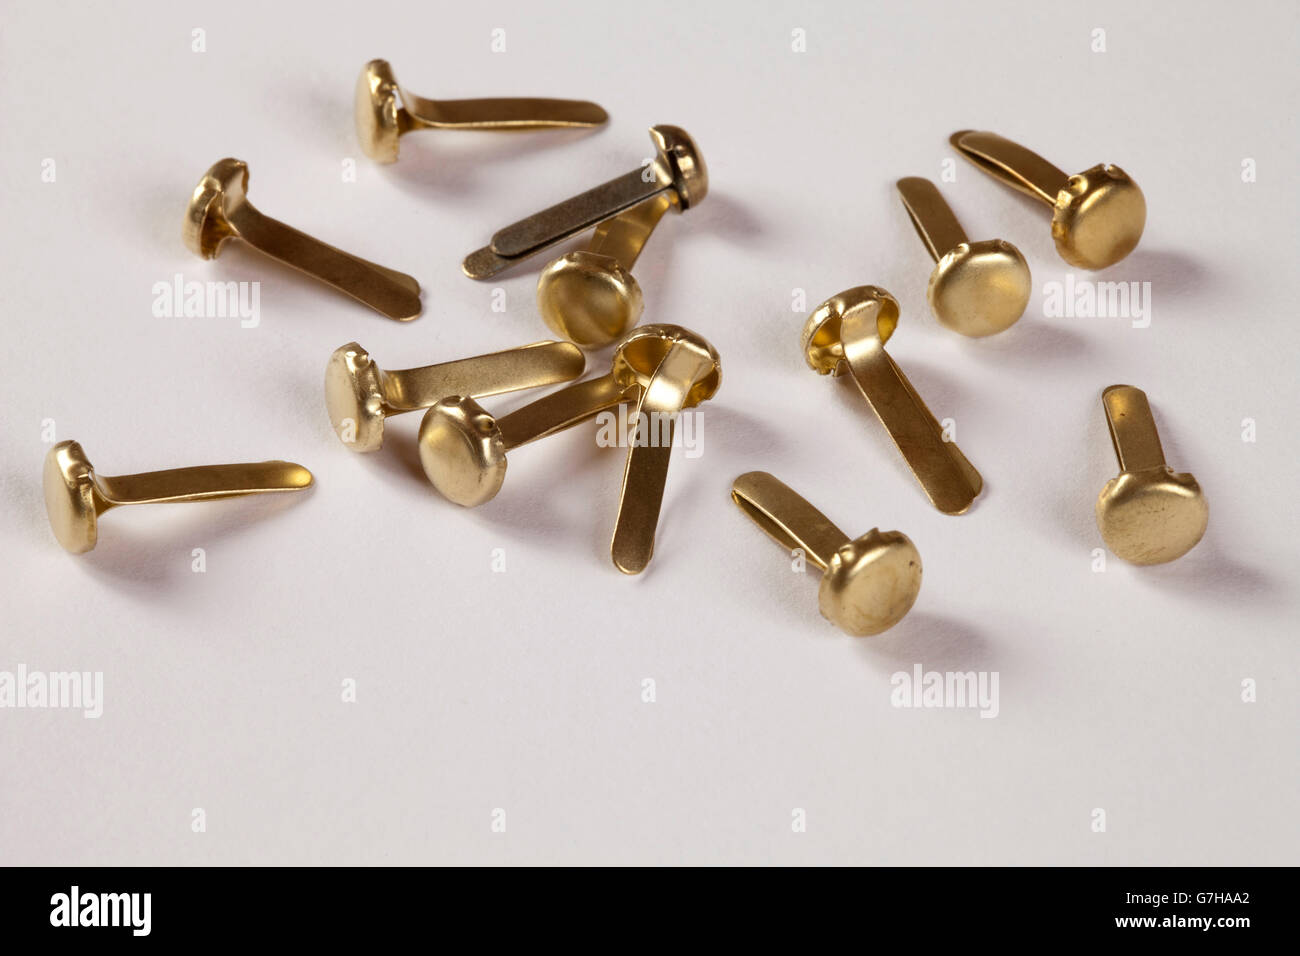 Brass fasteners Stock Photo